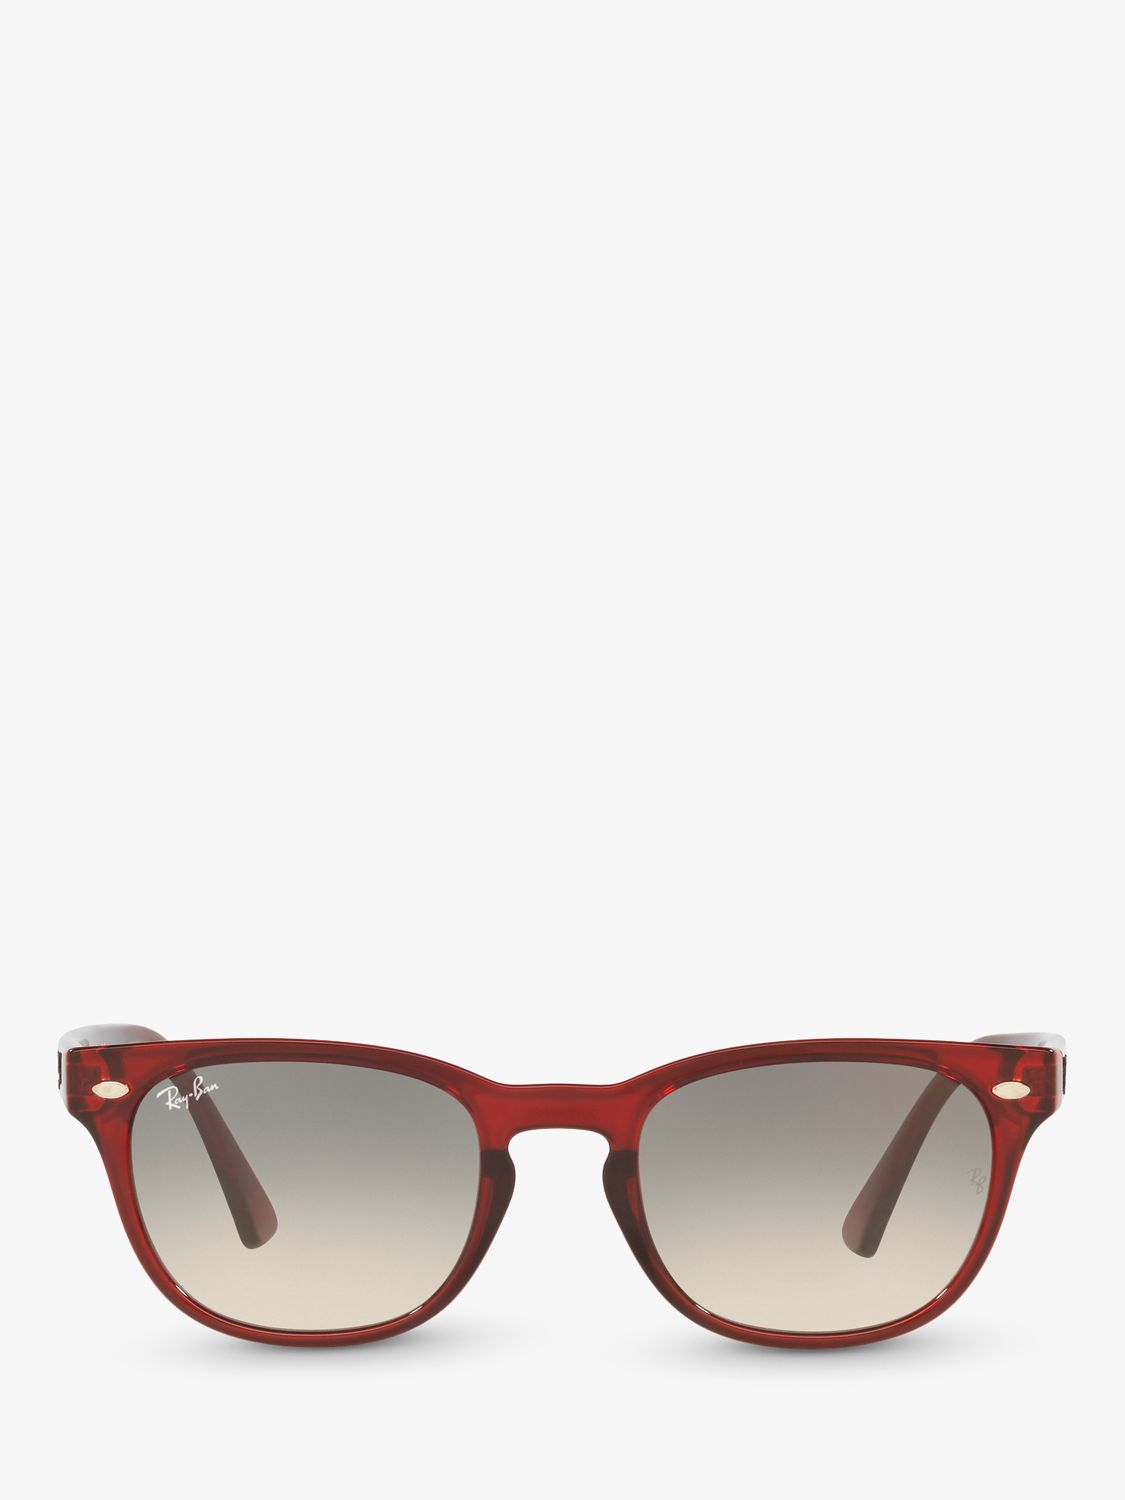 Ray-Ban RB4140 Women's Square Sunglasses, Rubin/Grey Gradient